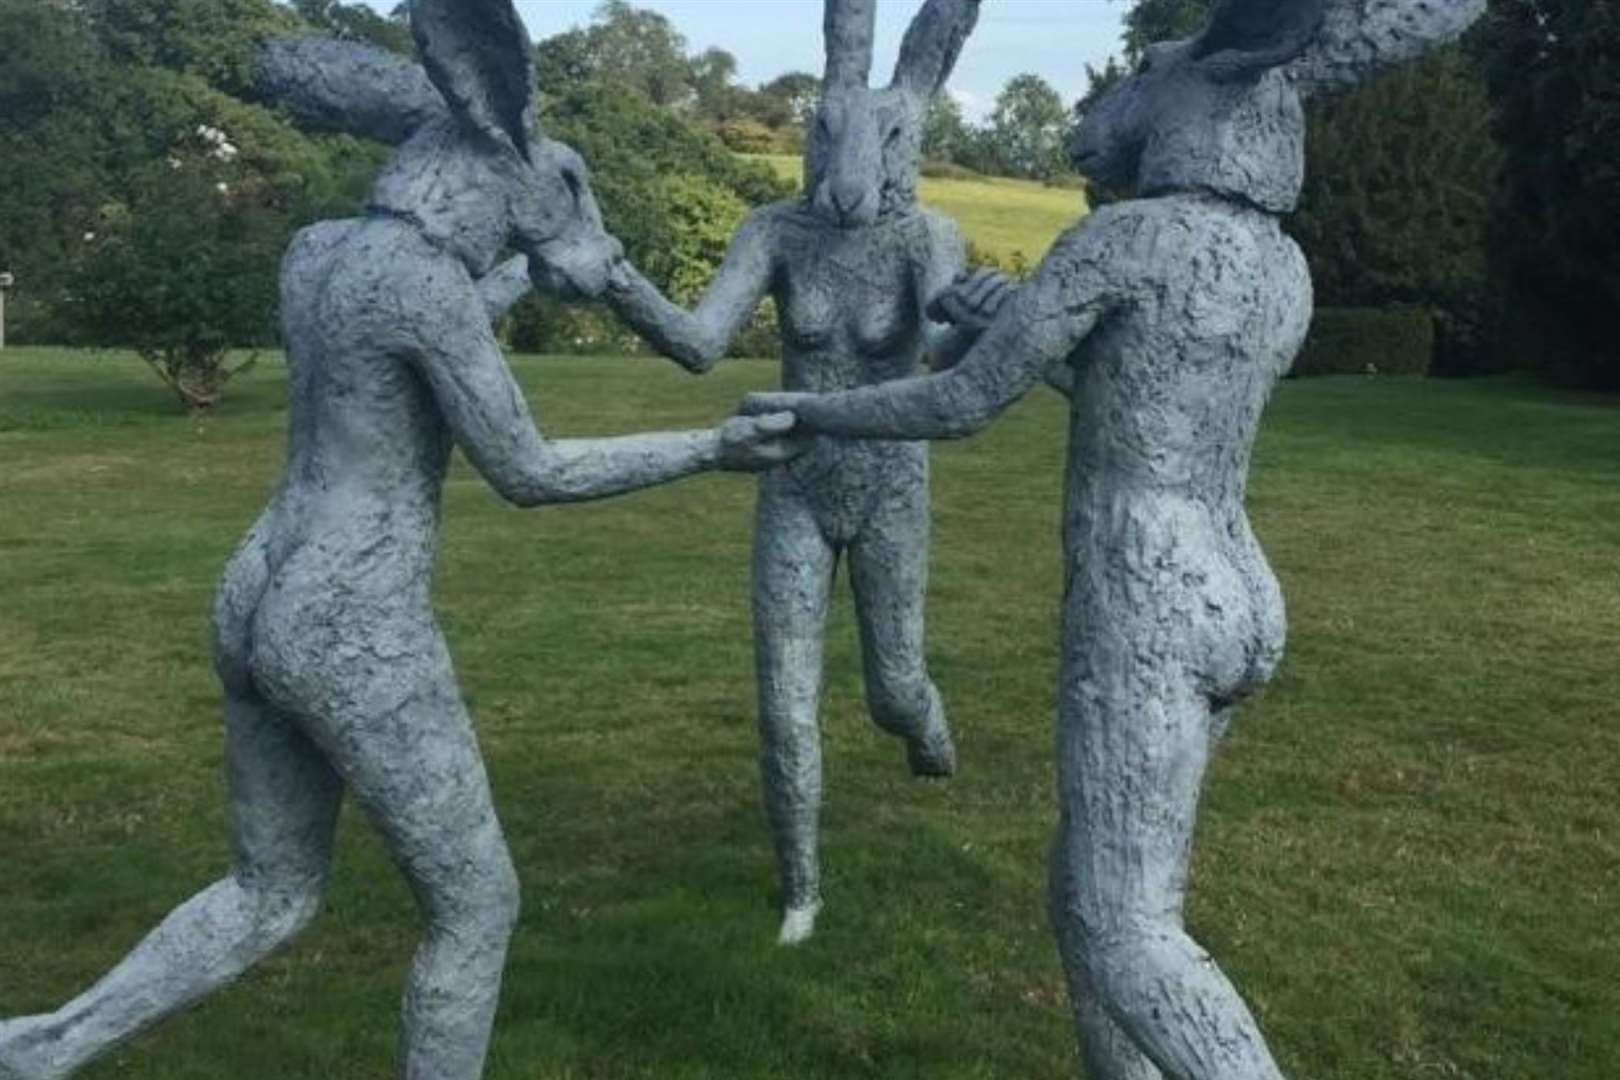 The three rabbit statues were taken from a garden in Wittersham. Photo: Kent Police